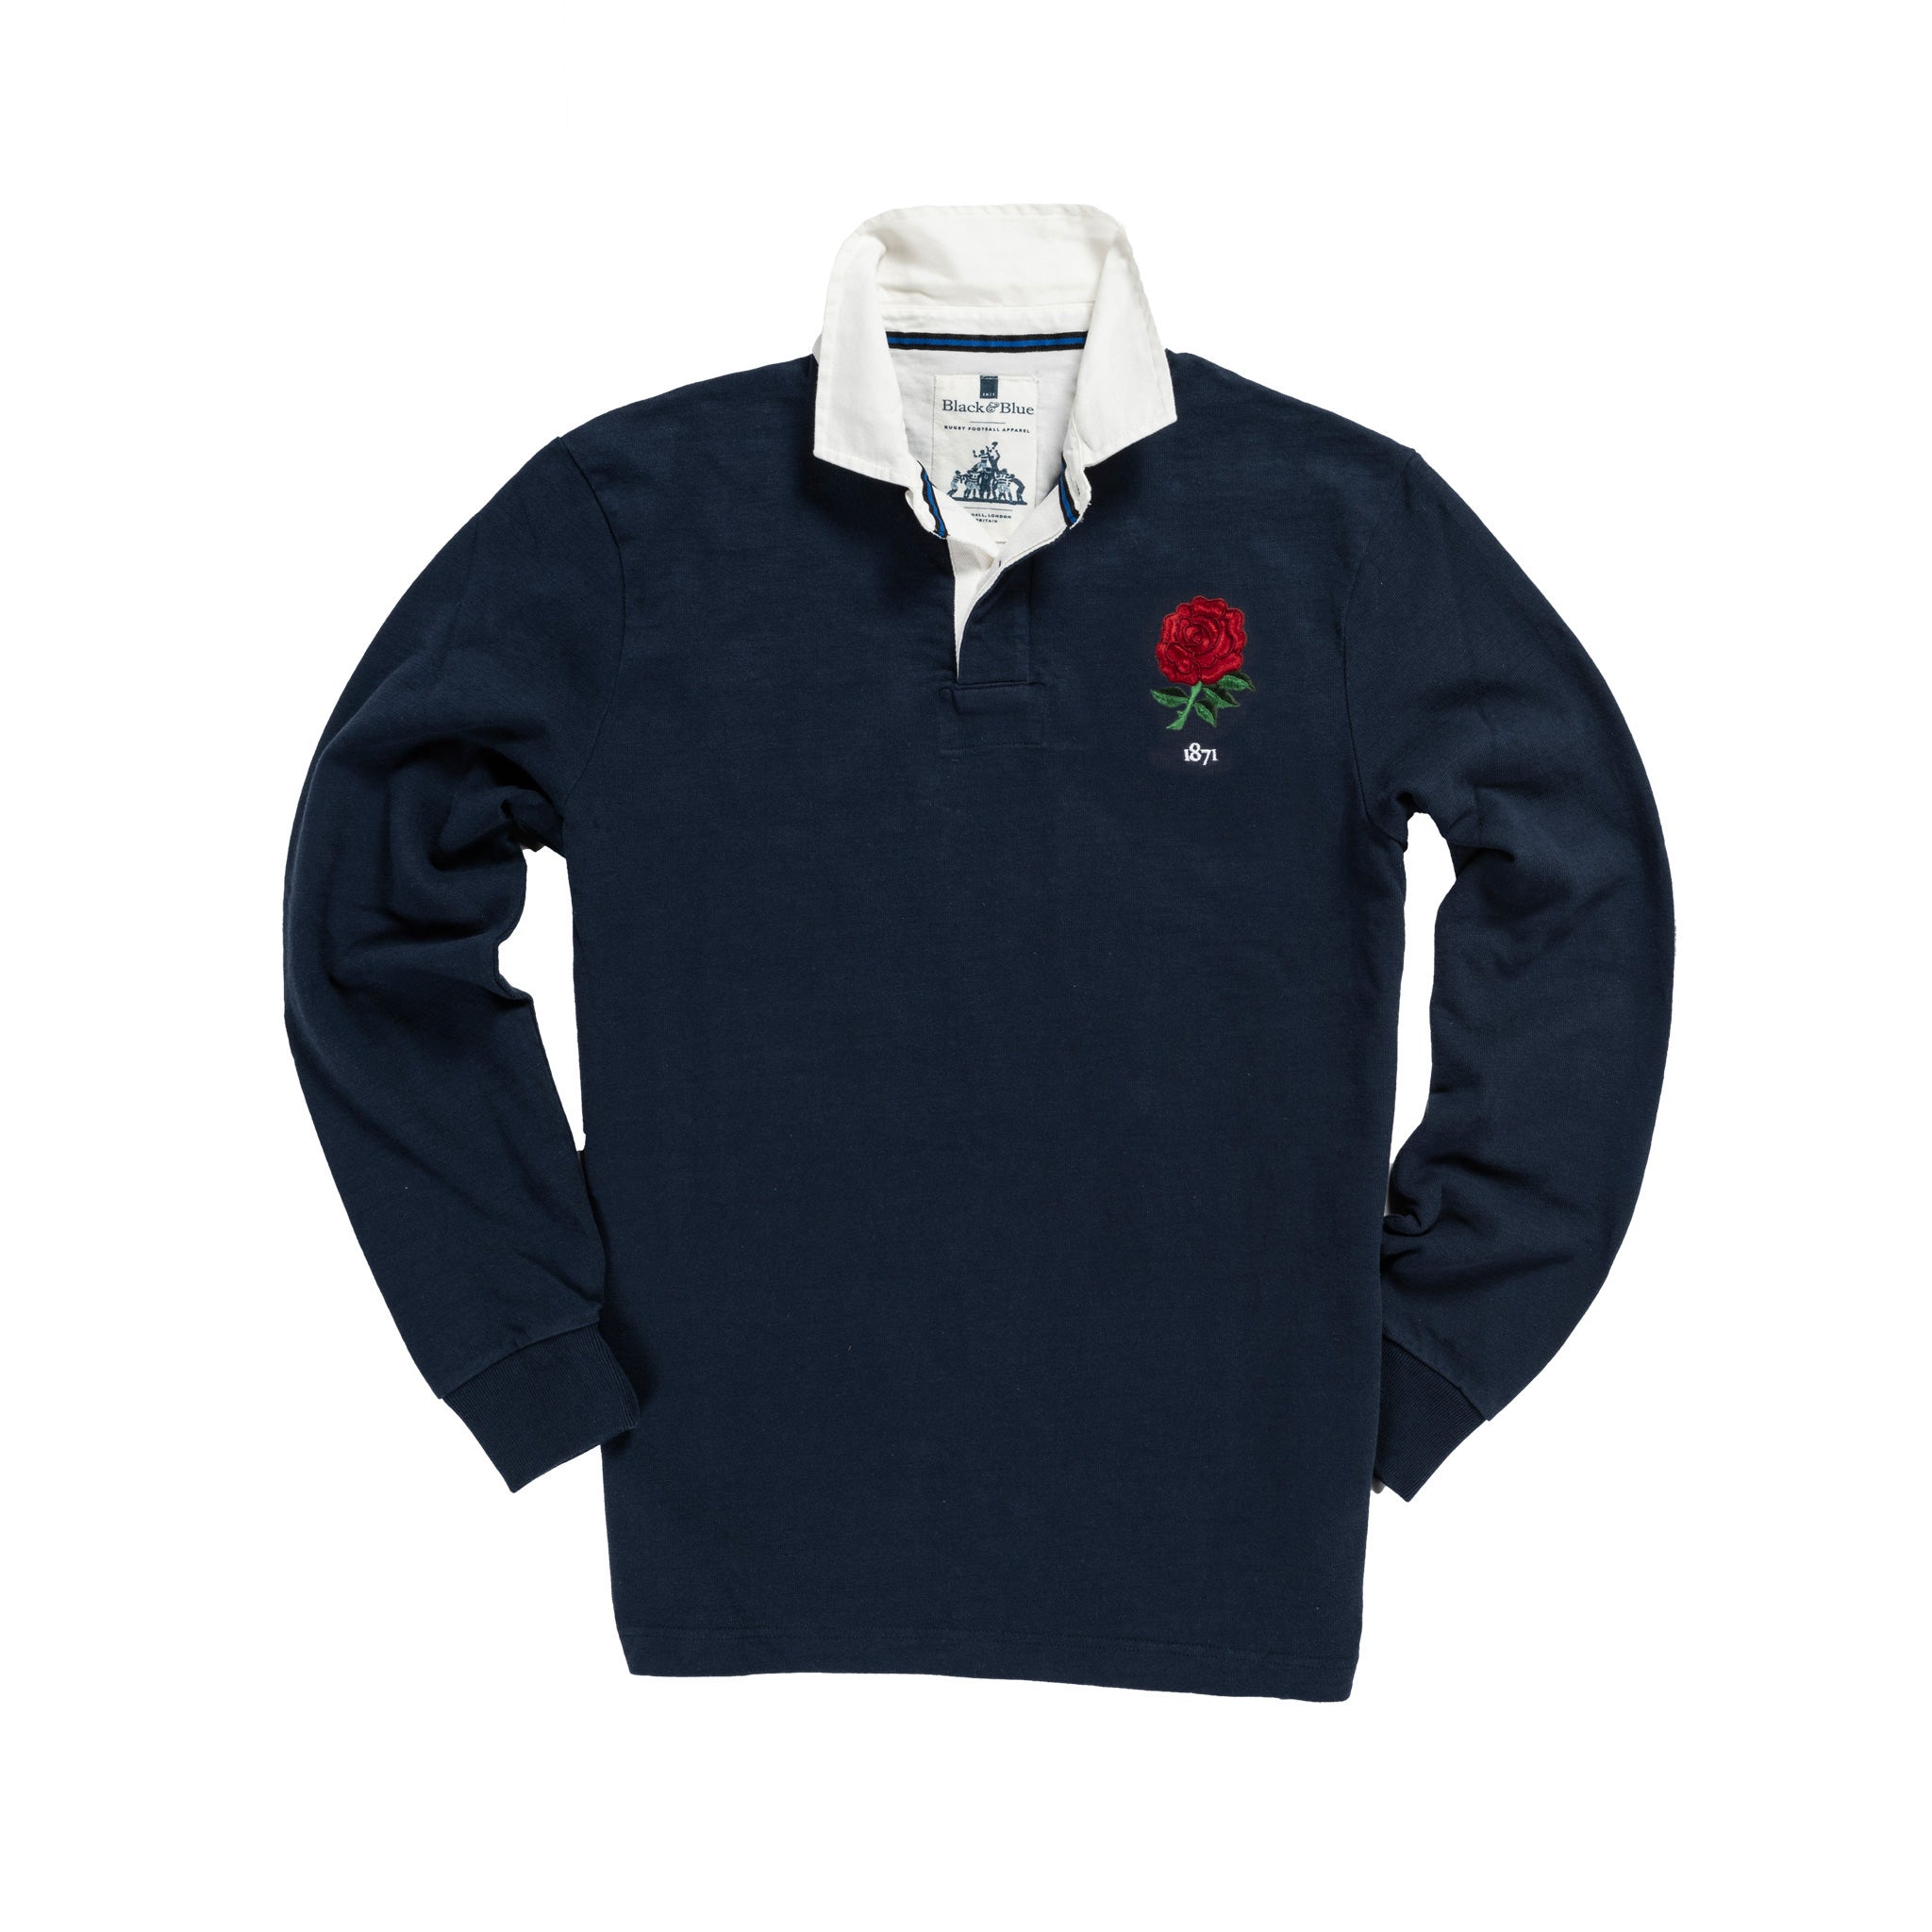 Black&Blue 1871 International Rugby Shirts